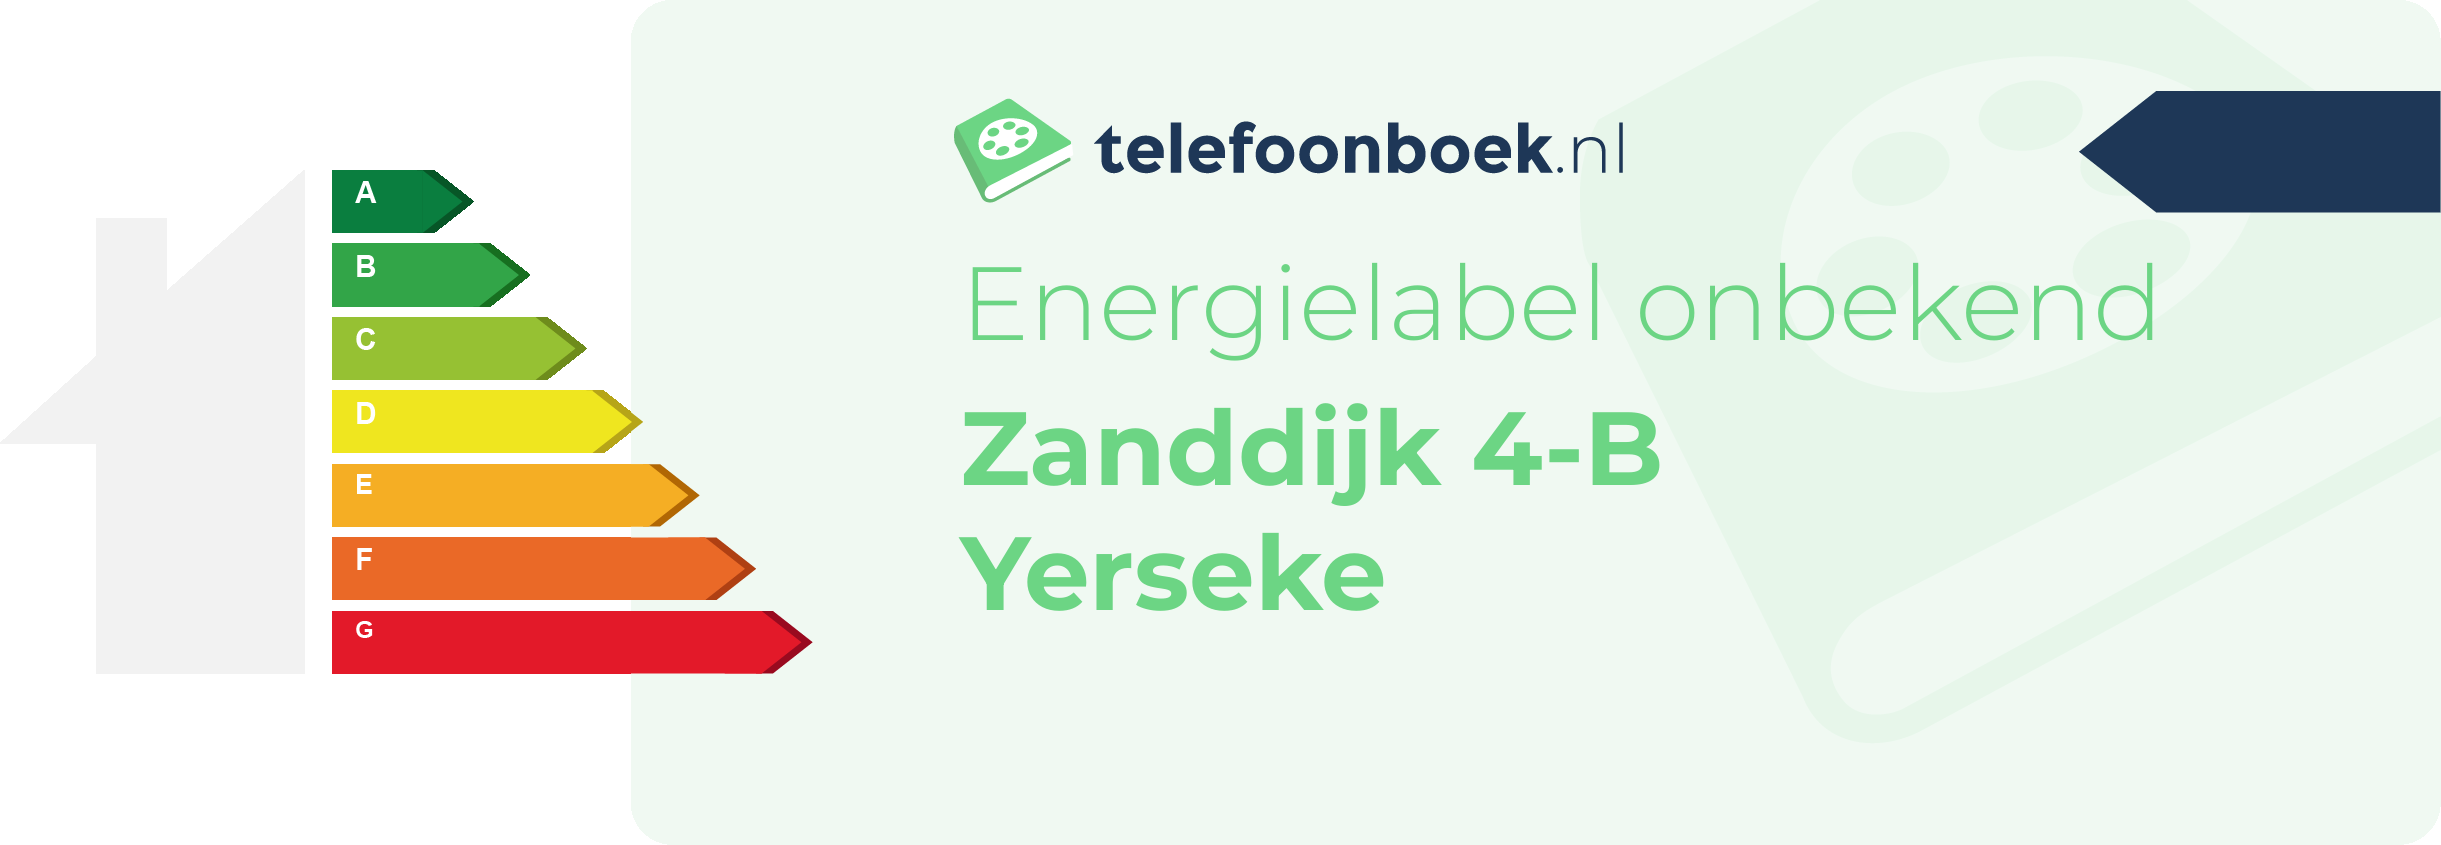 Energielabel Zanddijk 4-B Yerseke